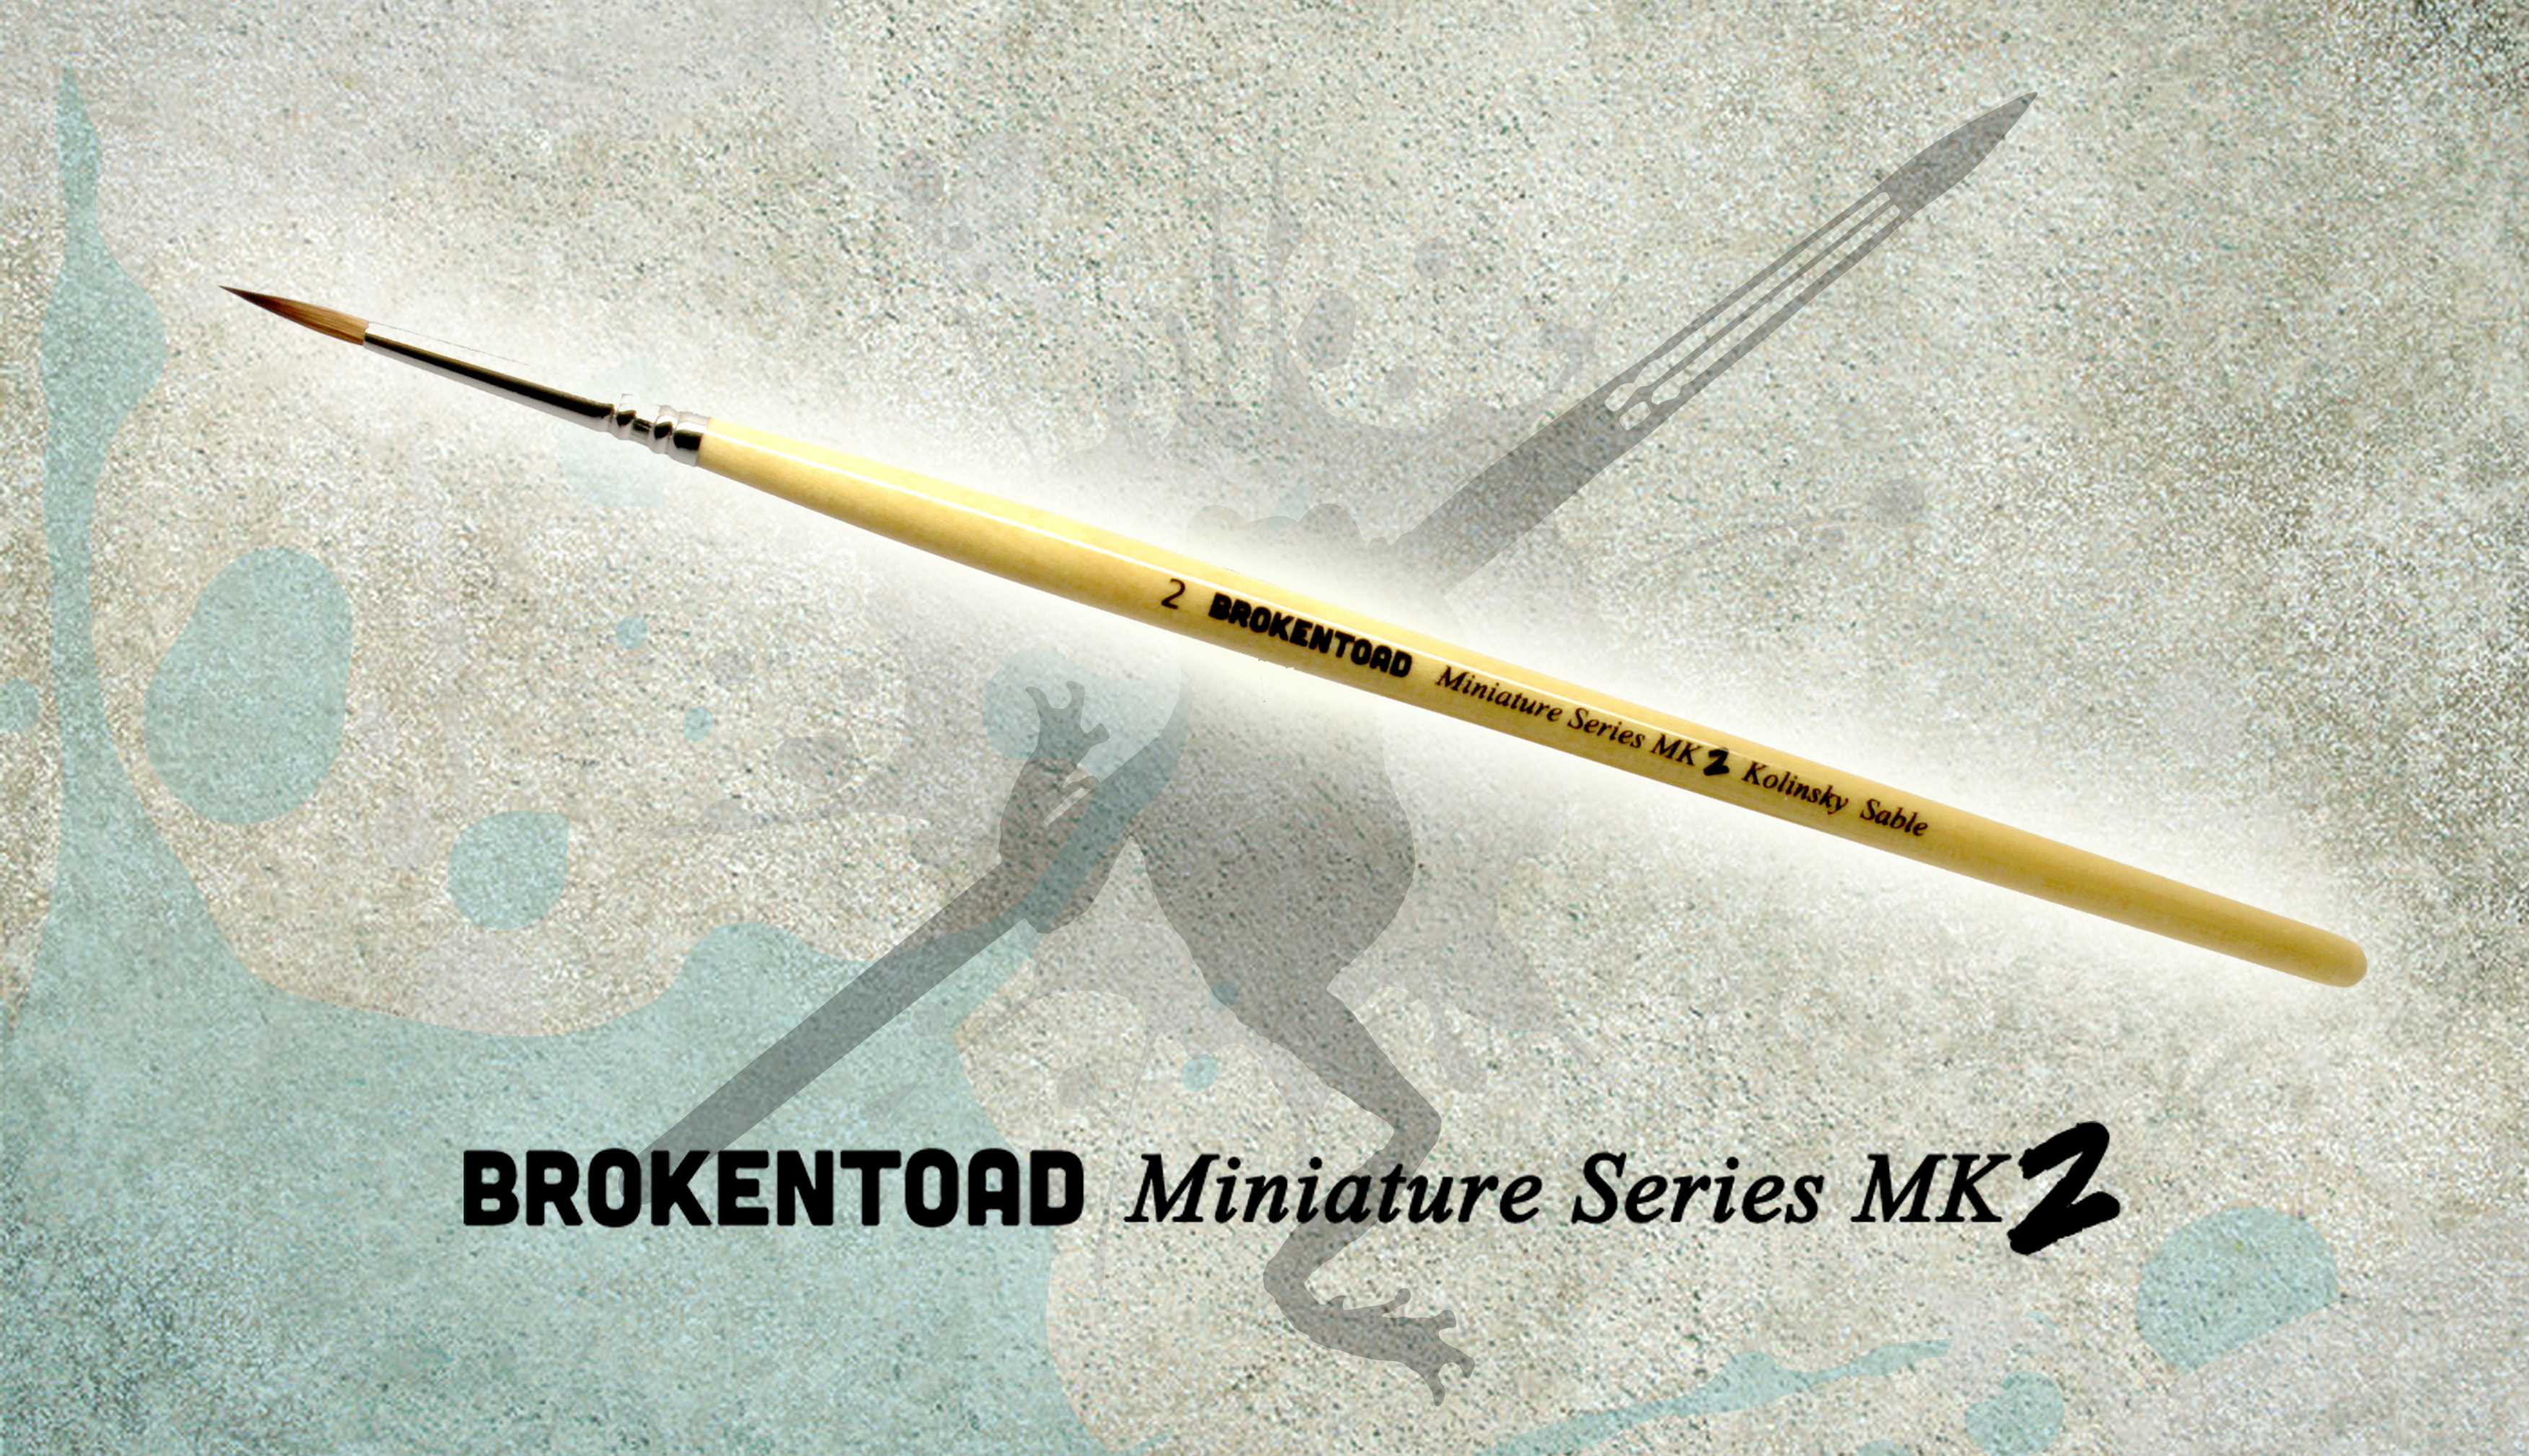 BrokenToad Miniature Series MK2 brushes